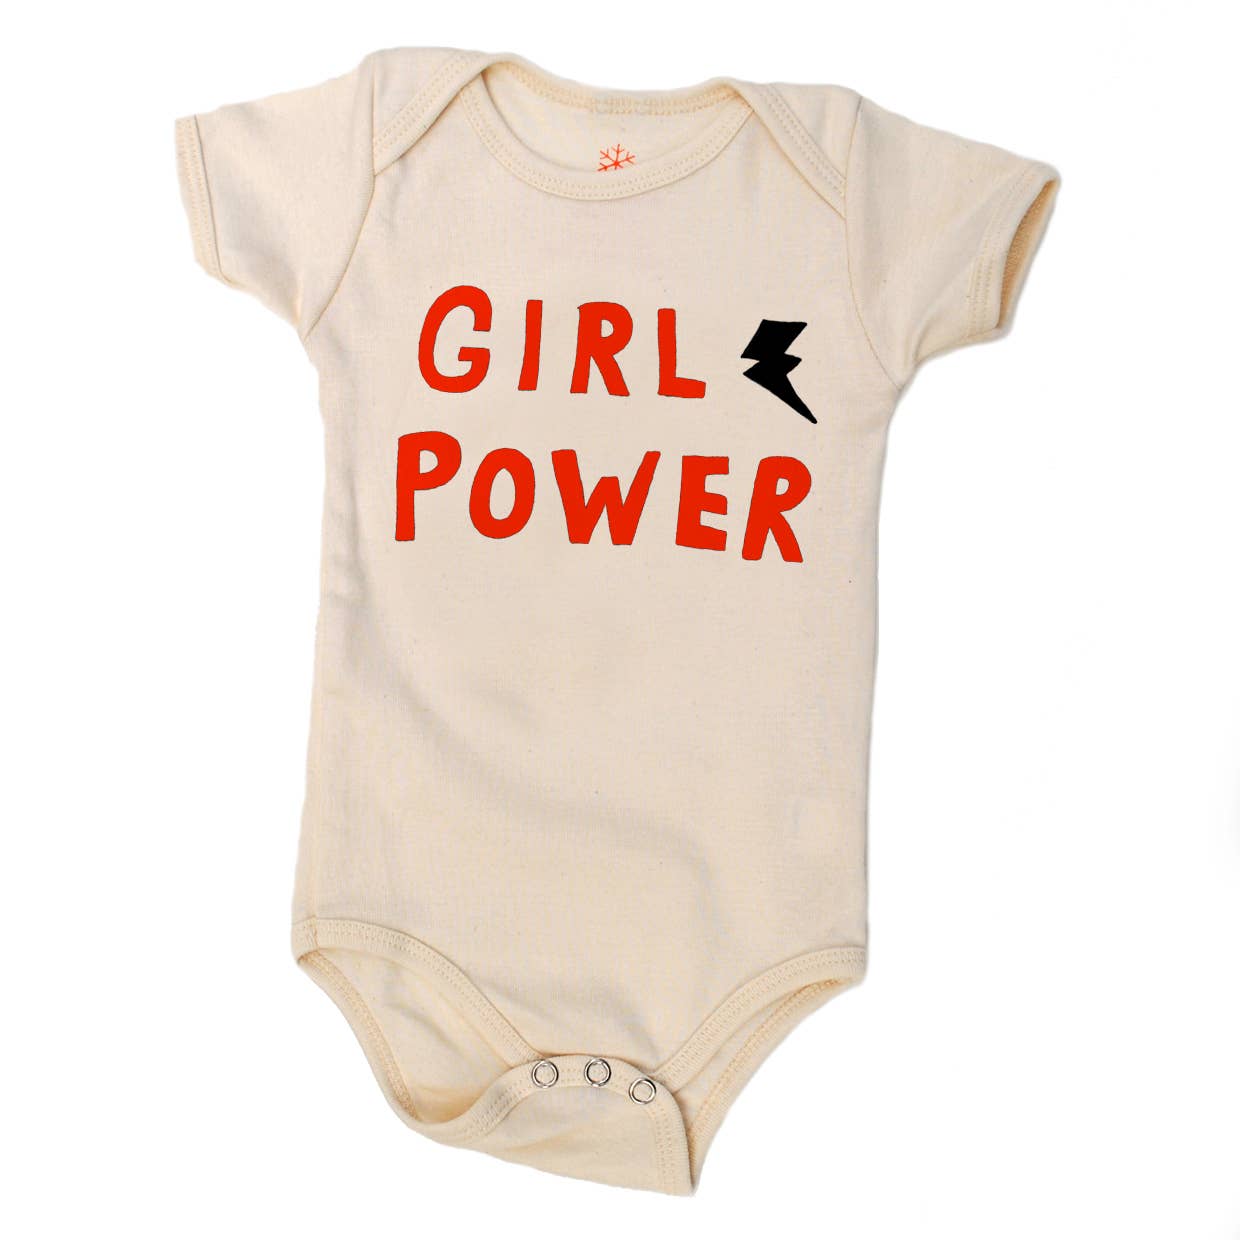 Girl Power Organic Cotton Baby Onesie